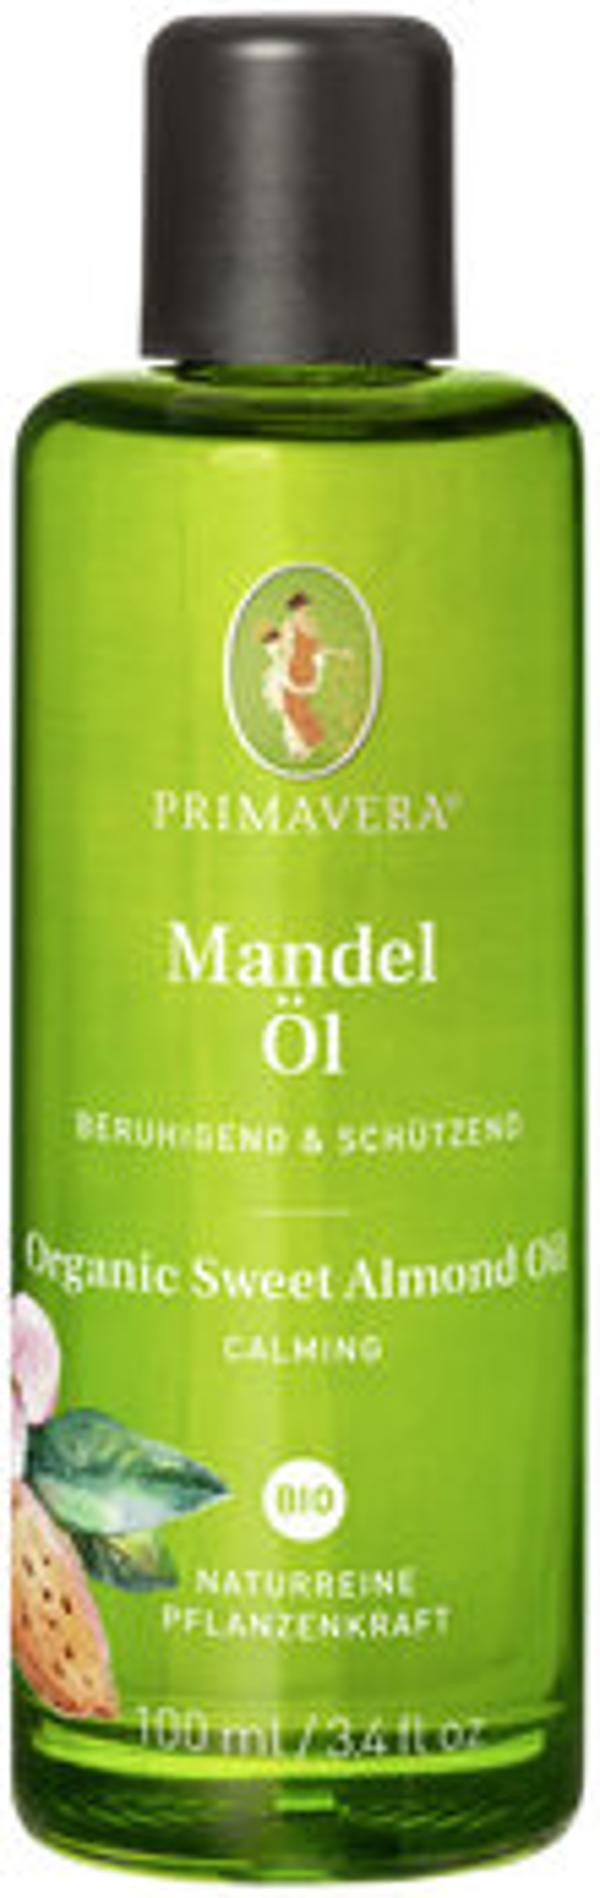 Produktfoto zu Mandelöl 100 ml